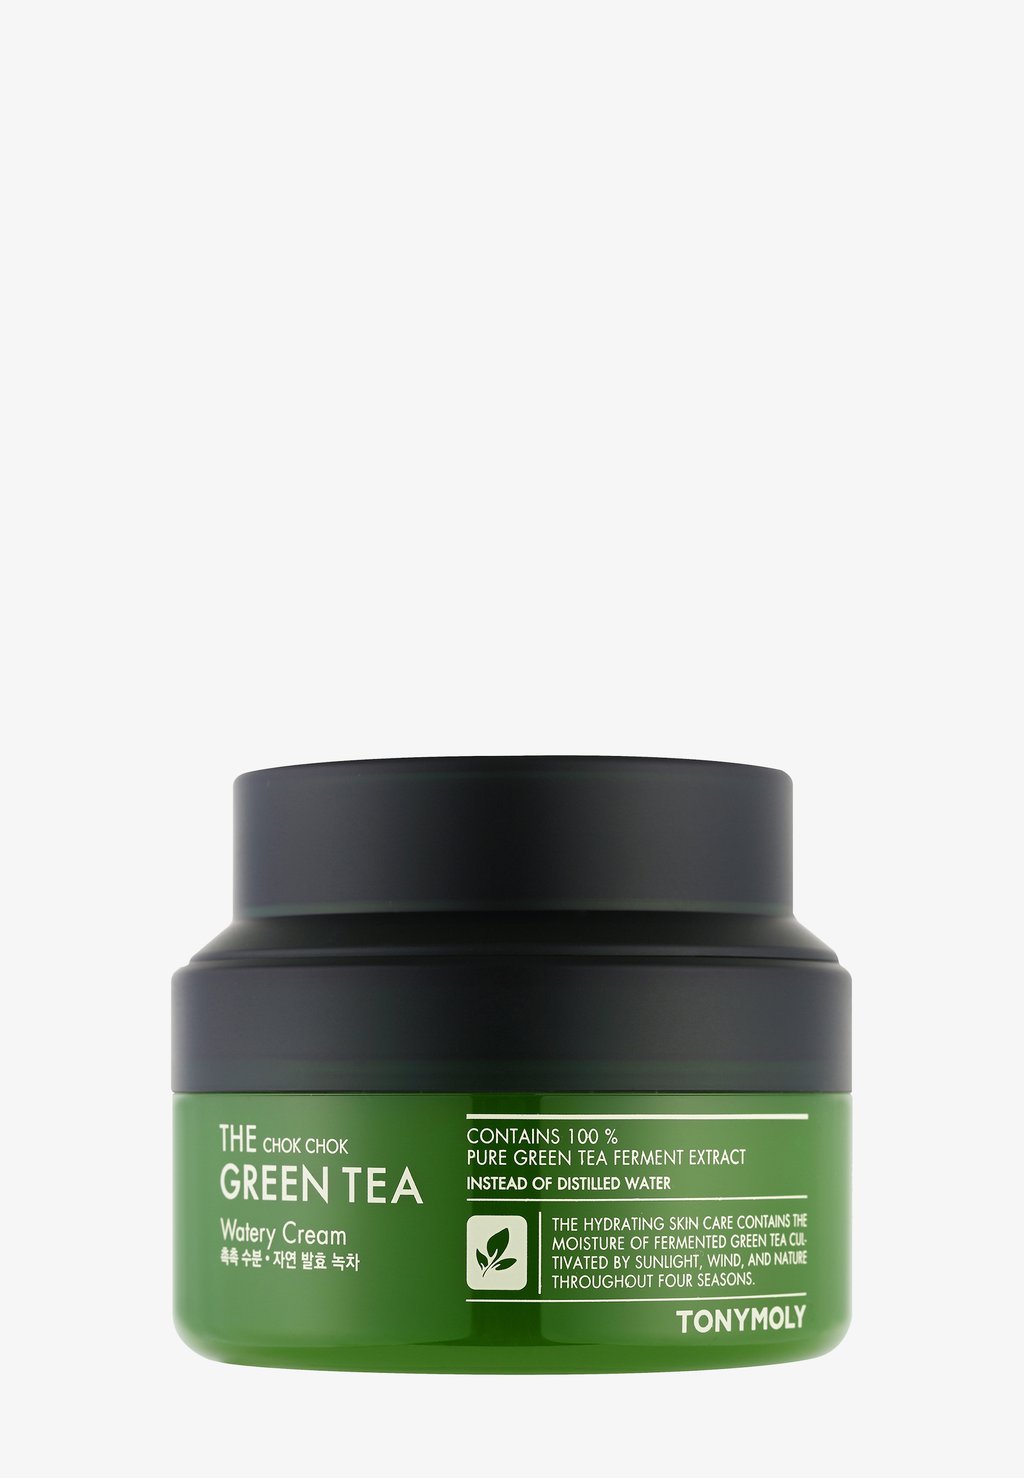 Дневной крем The Chok Green Tea Watery Cream TONYMOLY